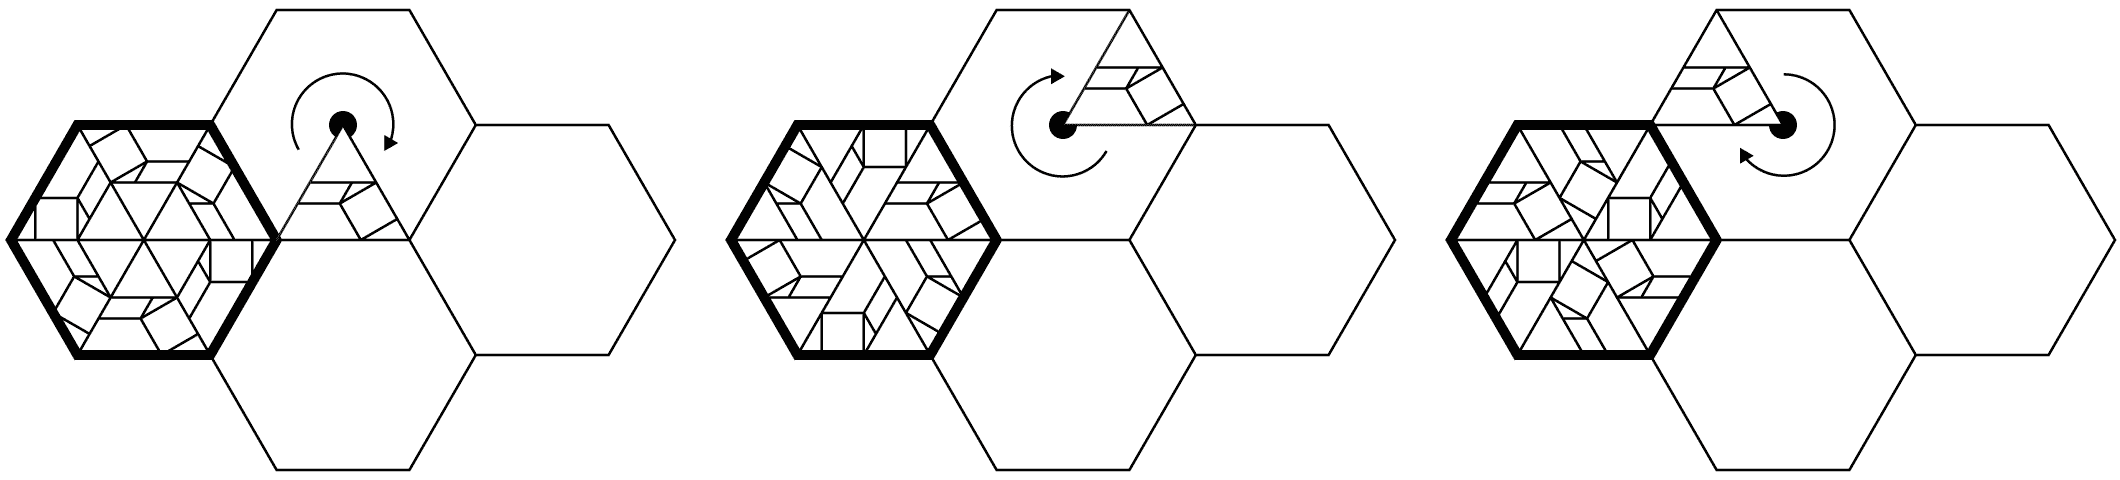 Tile rotations